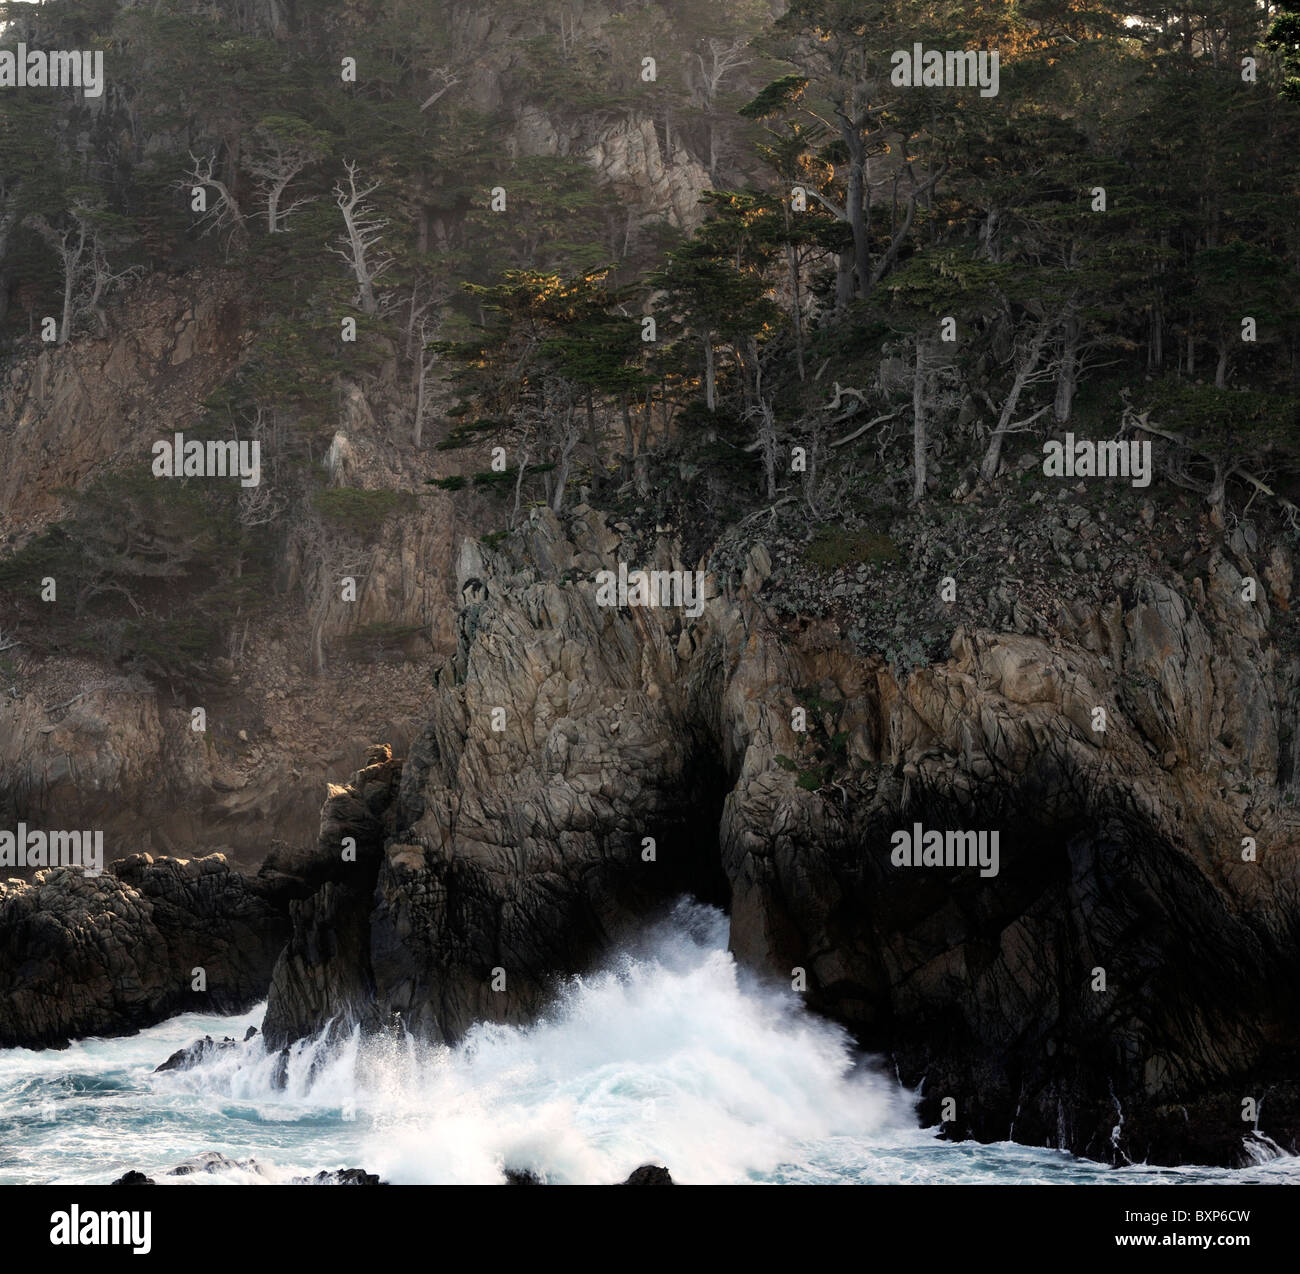 Point Lobos coast coastal coastline State Reserve monterey bay rocky scenery California USA Stock Photo